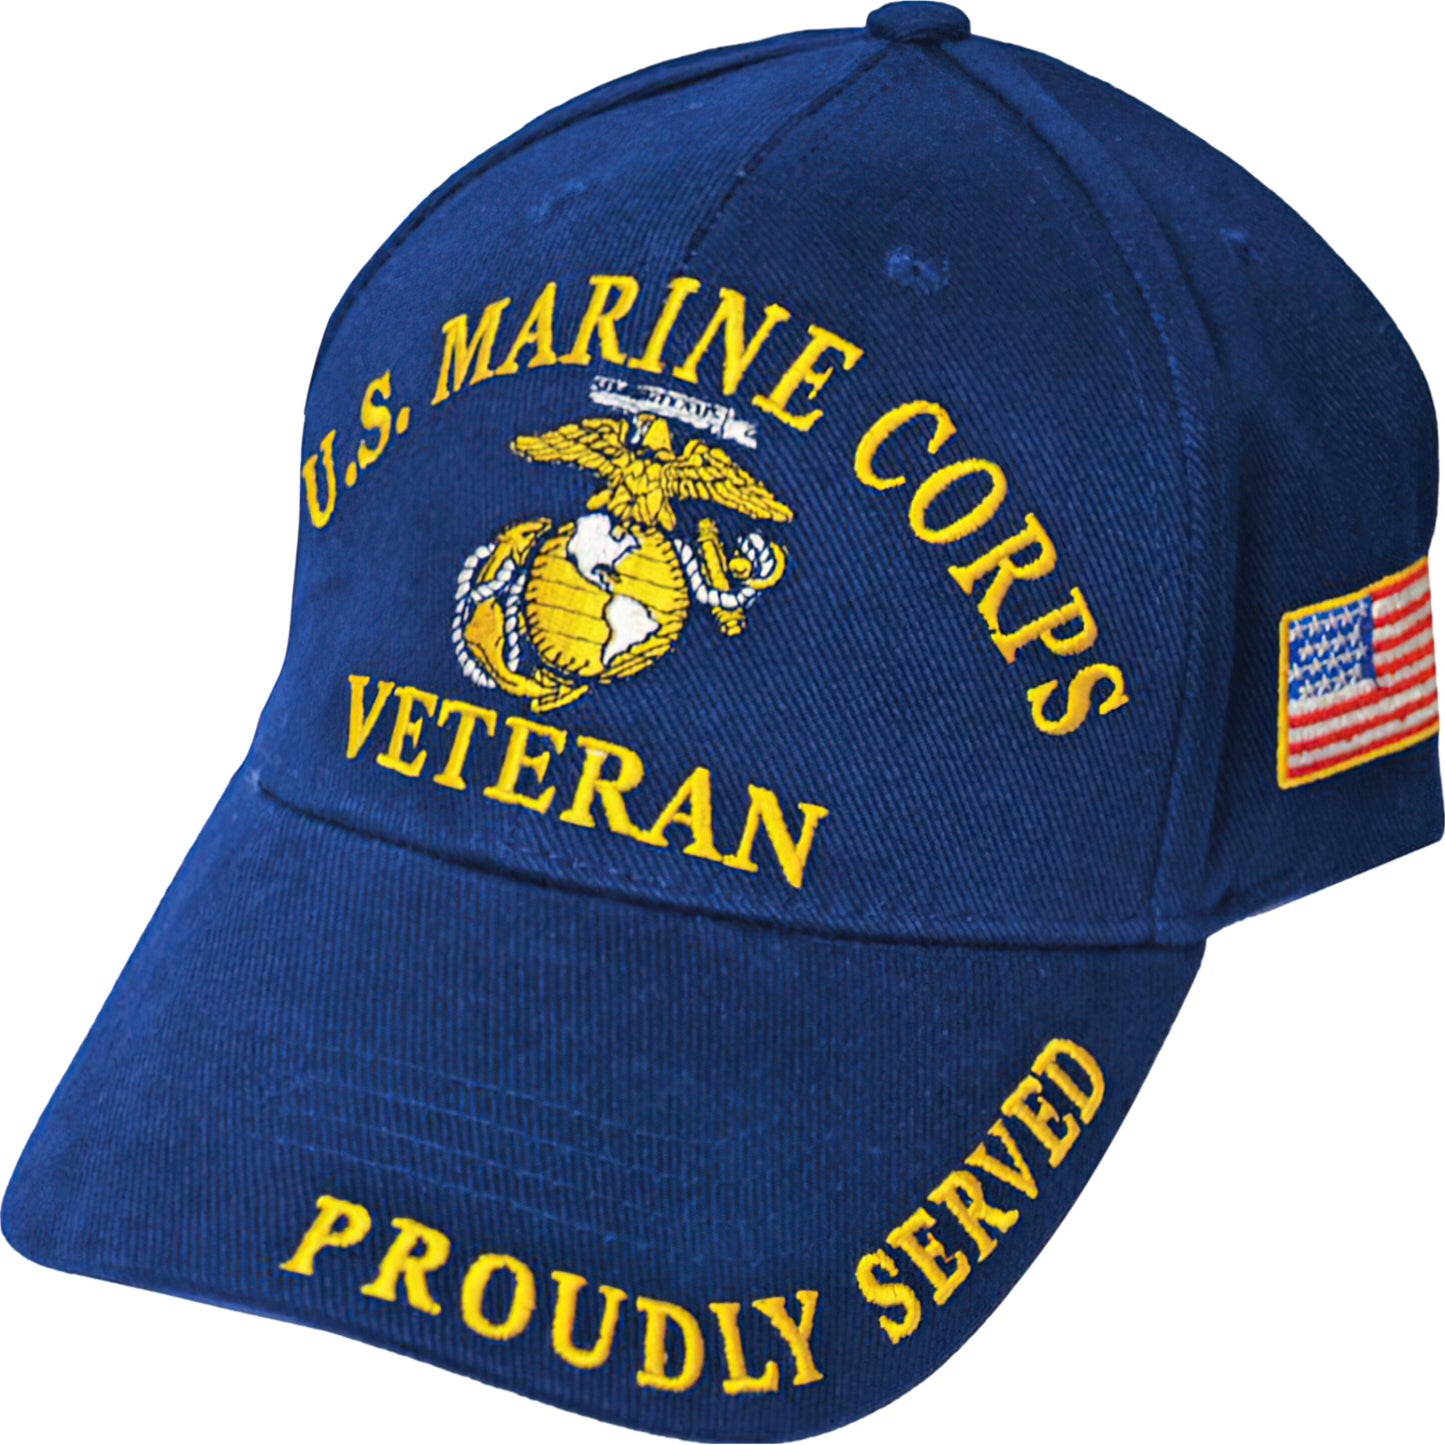 U.S. Marine Corps Veteran Proudly Served Hat Cap